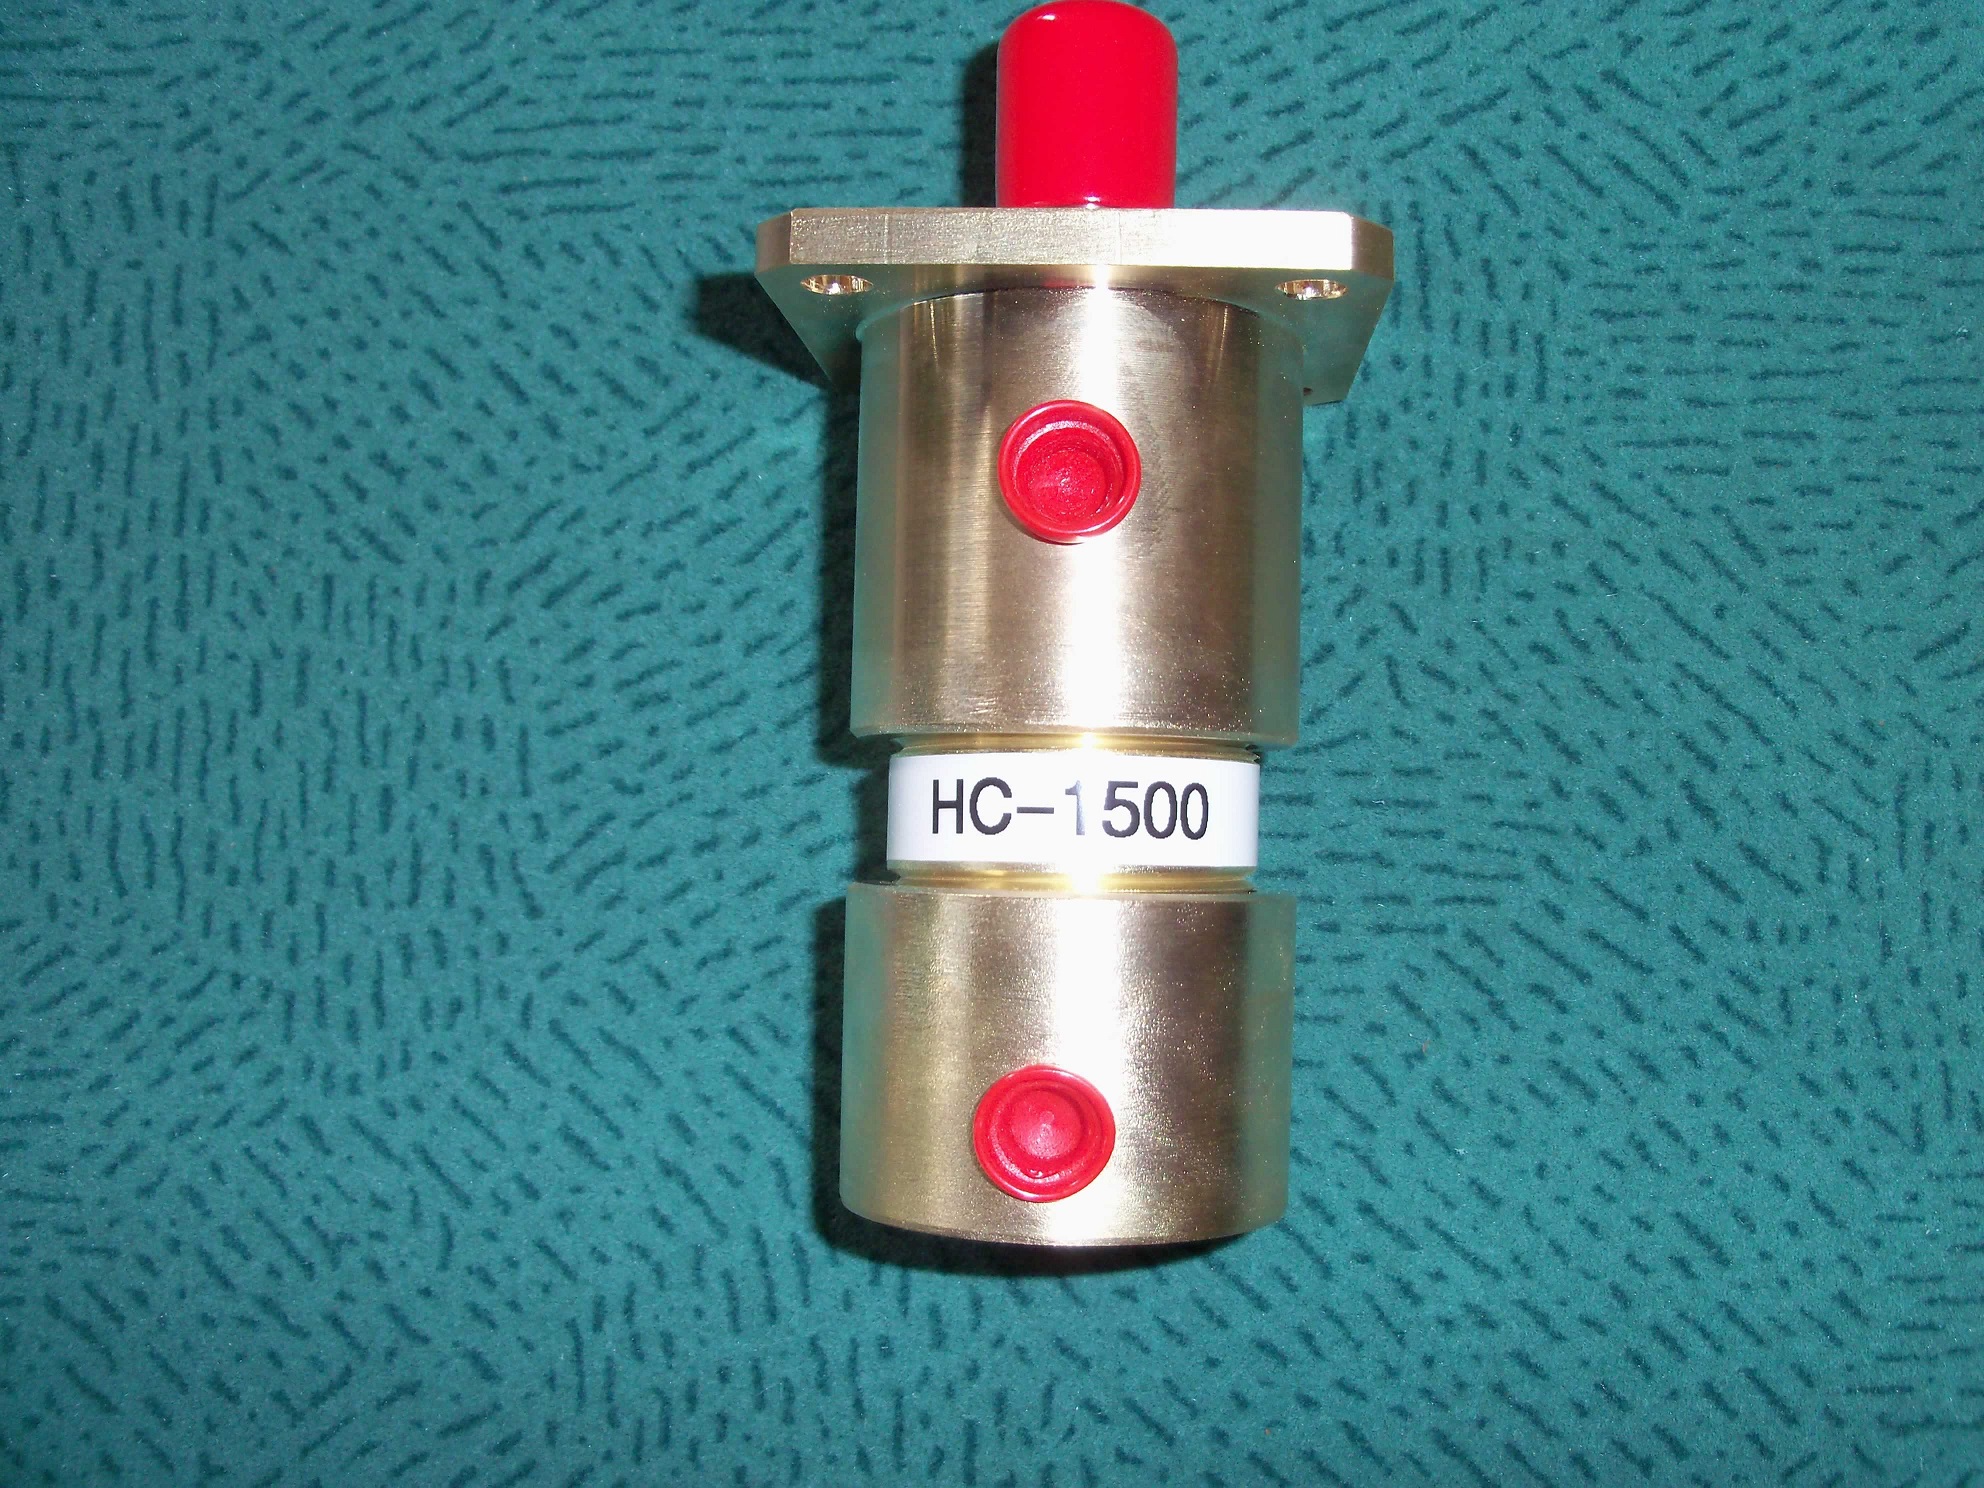 H-1500 Series High Pressure Cylinder